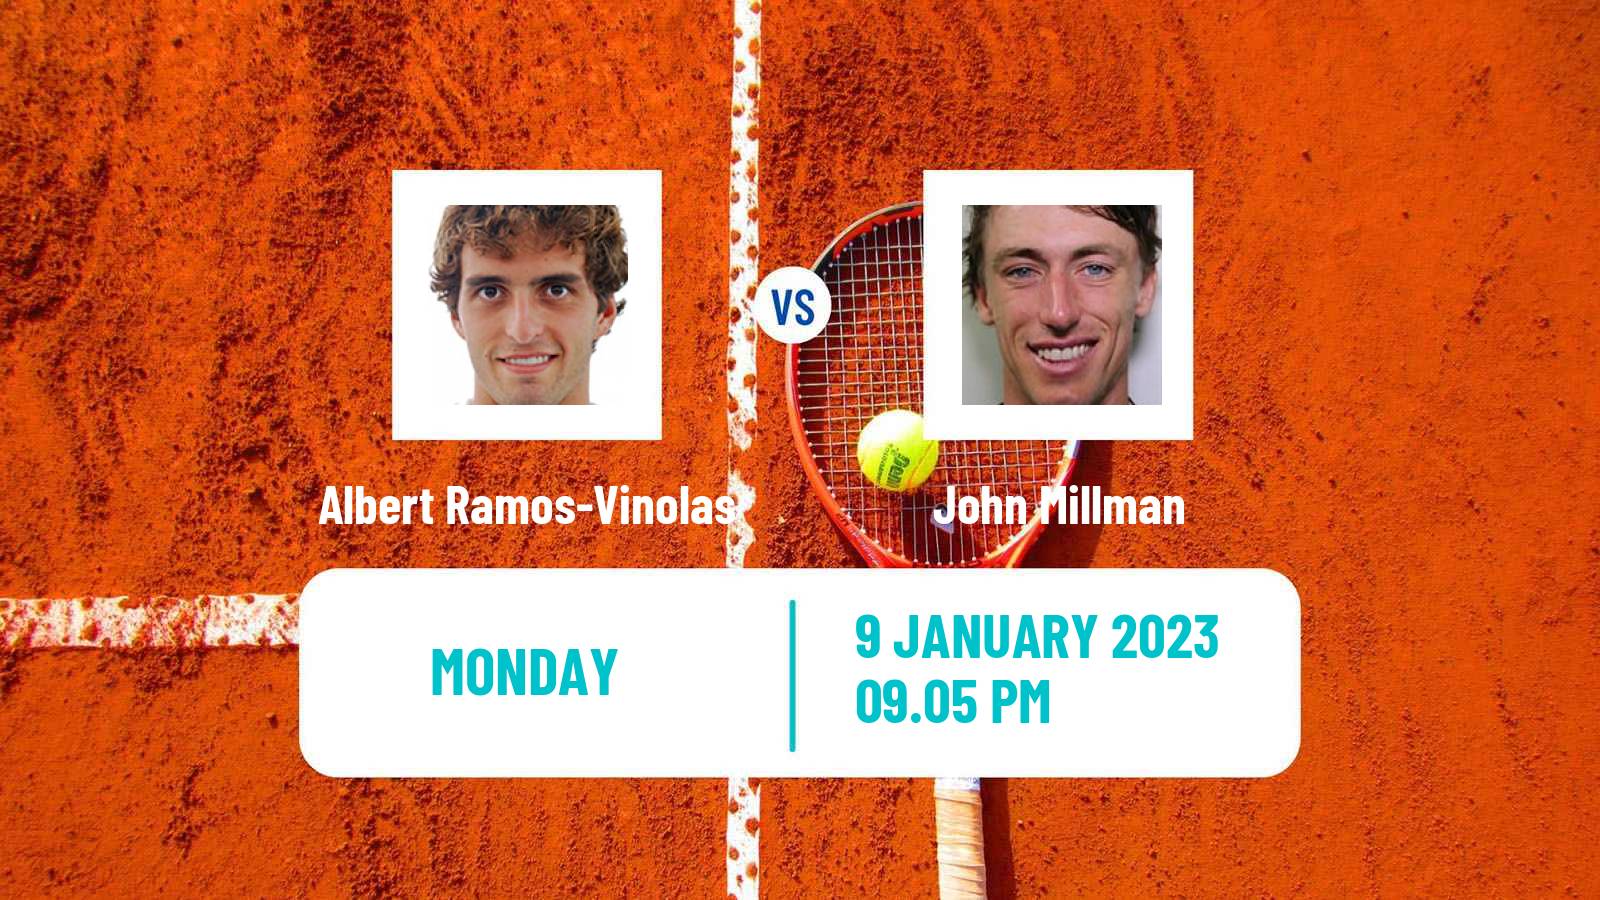 Tennis ATP Adelaide 2 Albert Ramos-Vinolas - John Millman